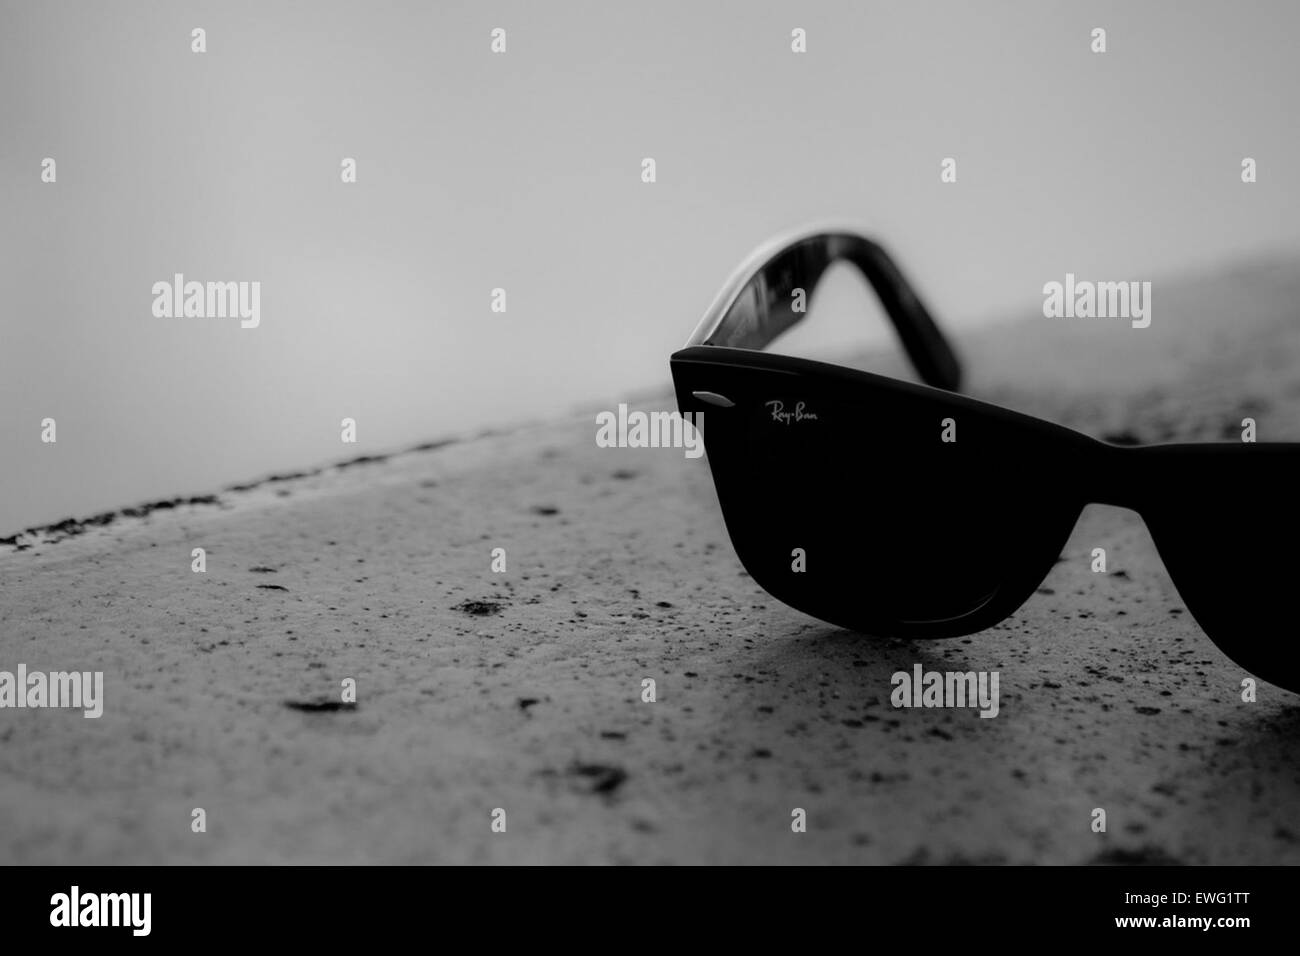 Gafas de sol ban negras fotografías e imágenes alta resolución - Alamy